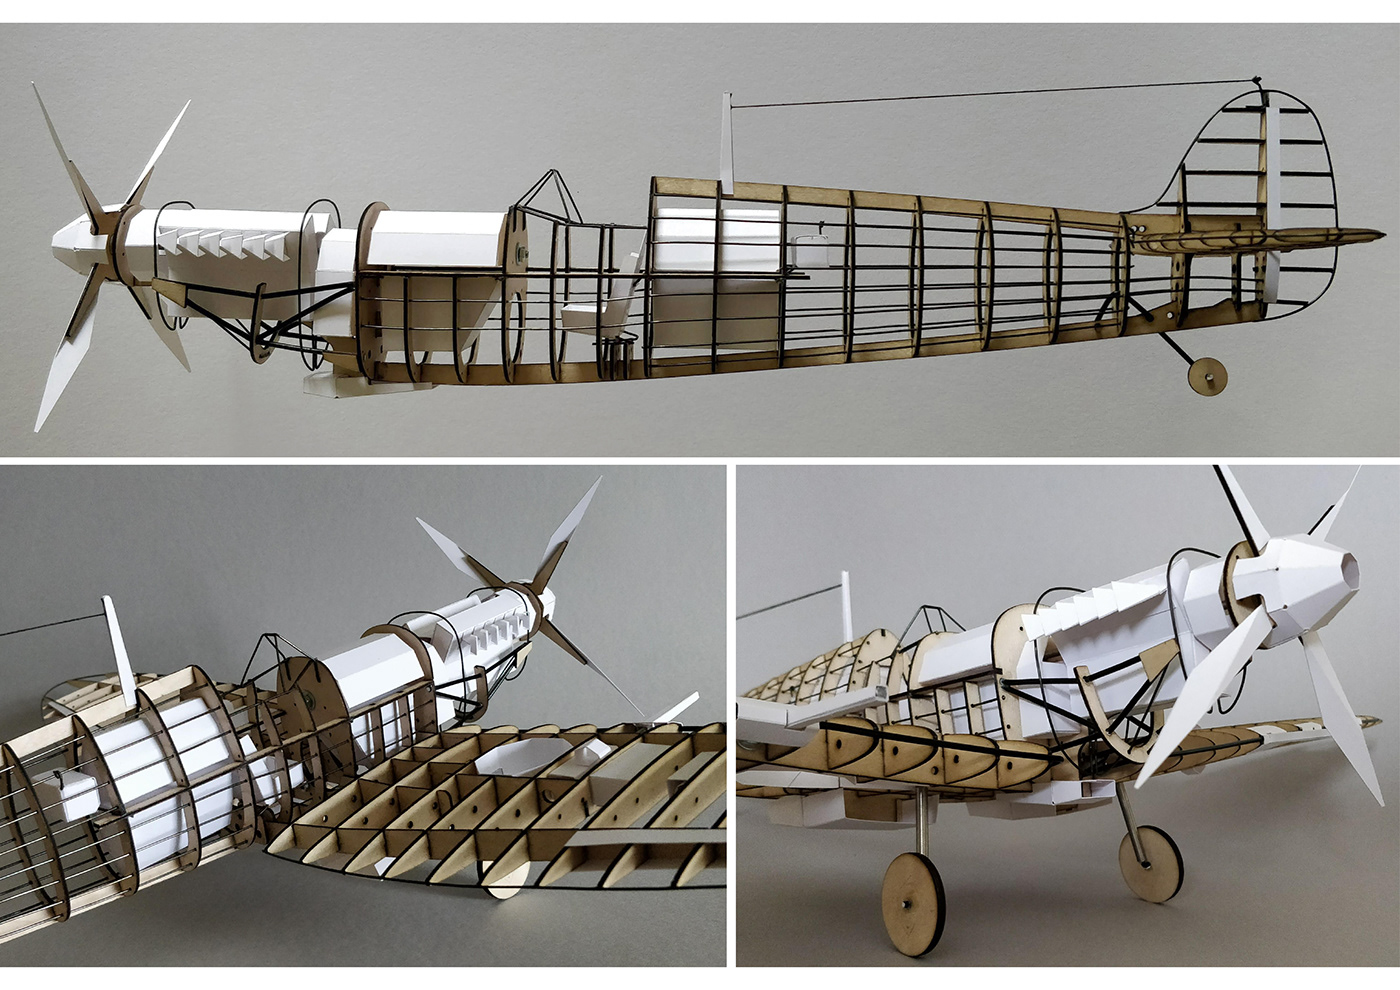 3d modeling Engineering  fabrication industrial design  laser cutting model Model Making paper folding plane Spitfire